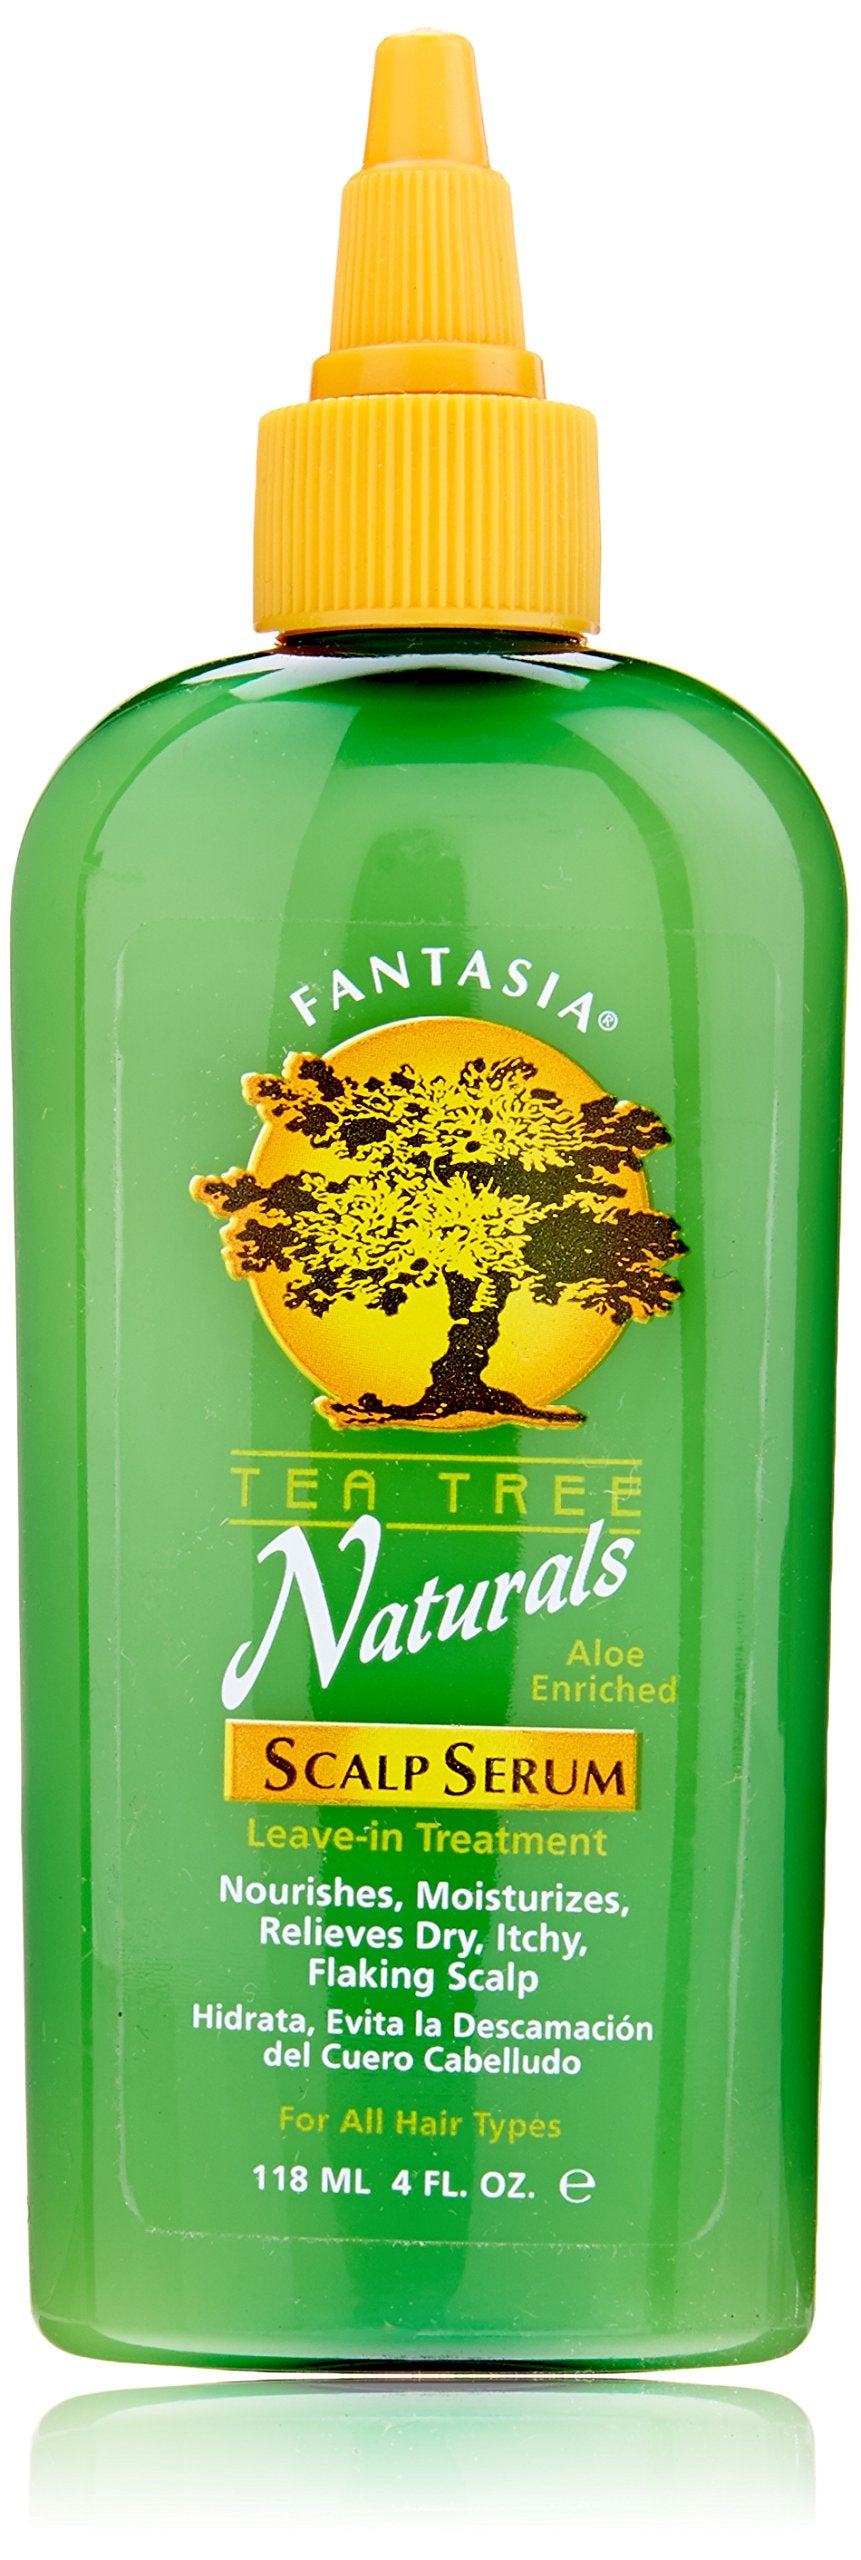 Fantasia Tea Tree Naturals Scalp Serum